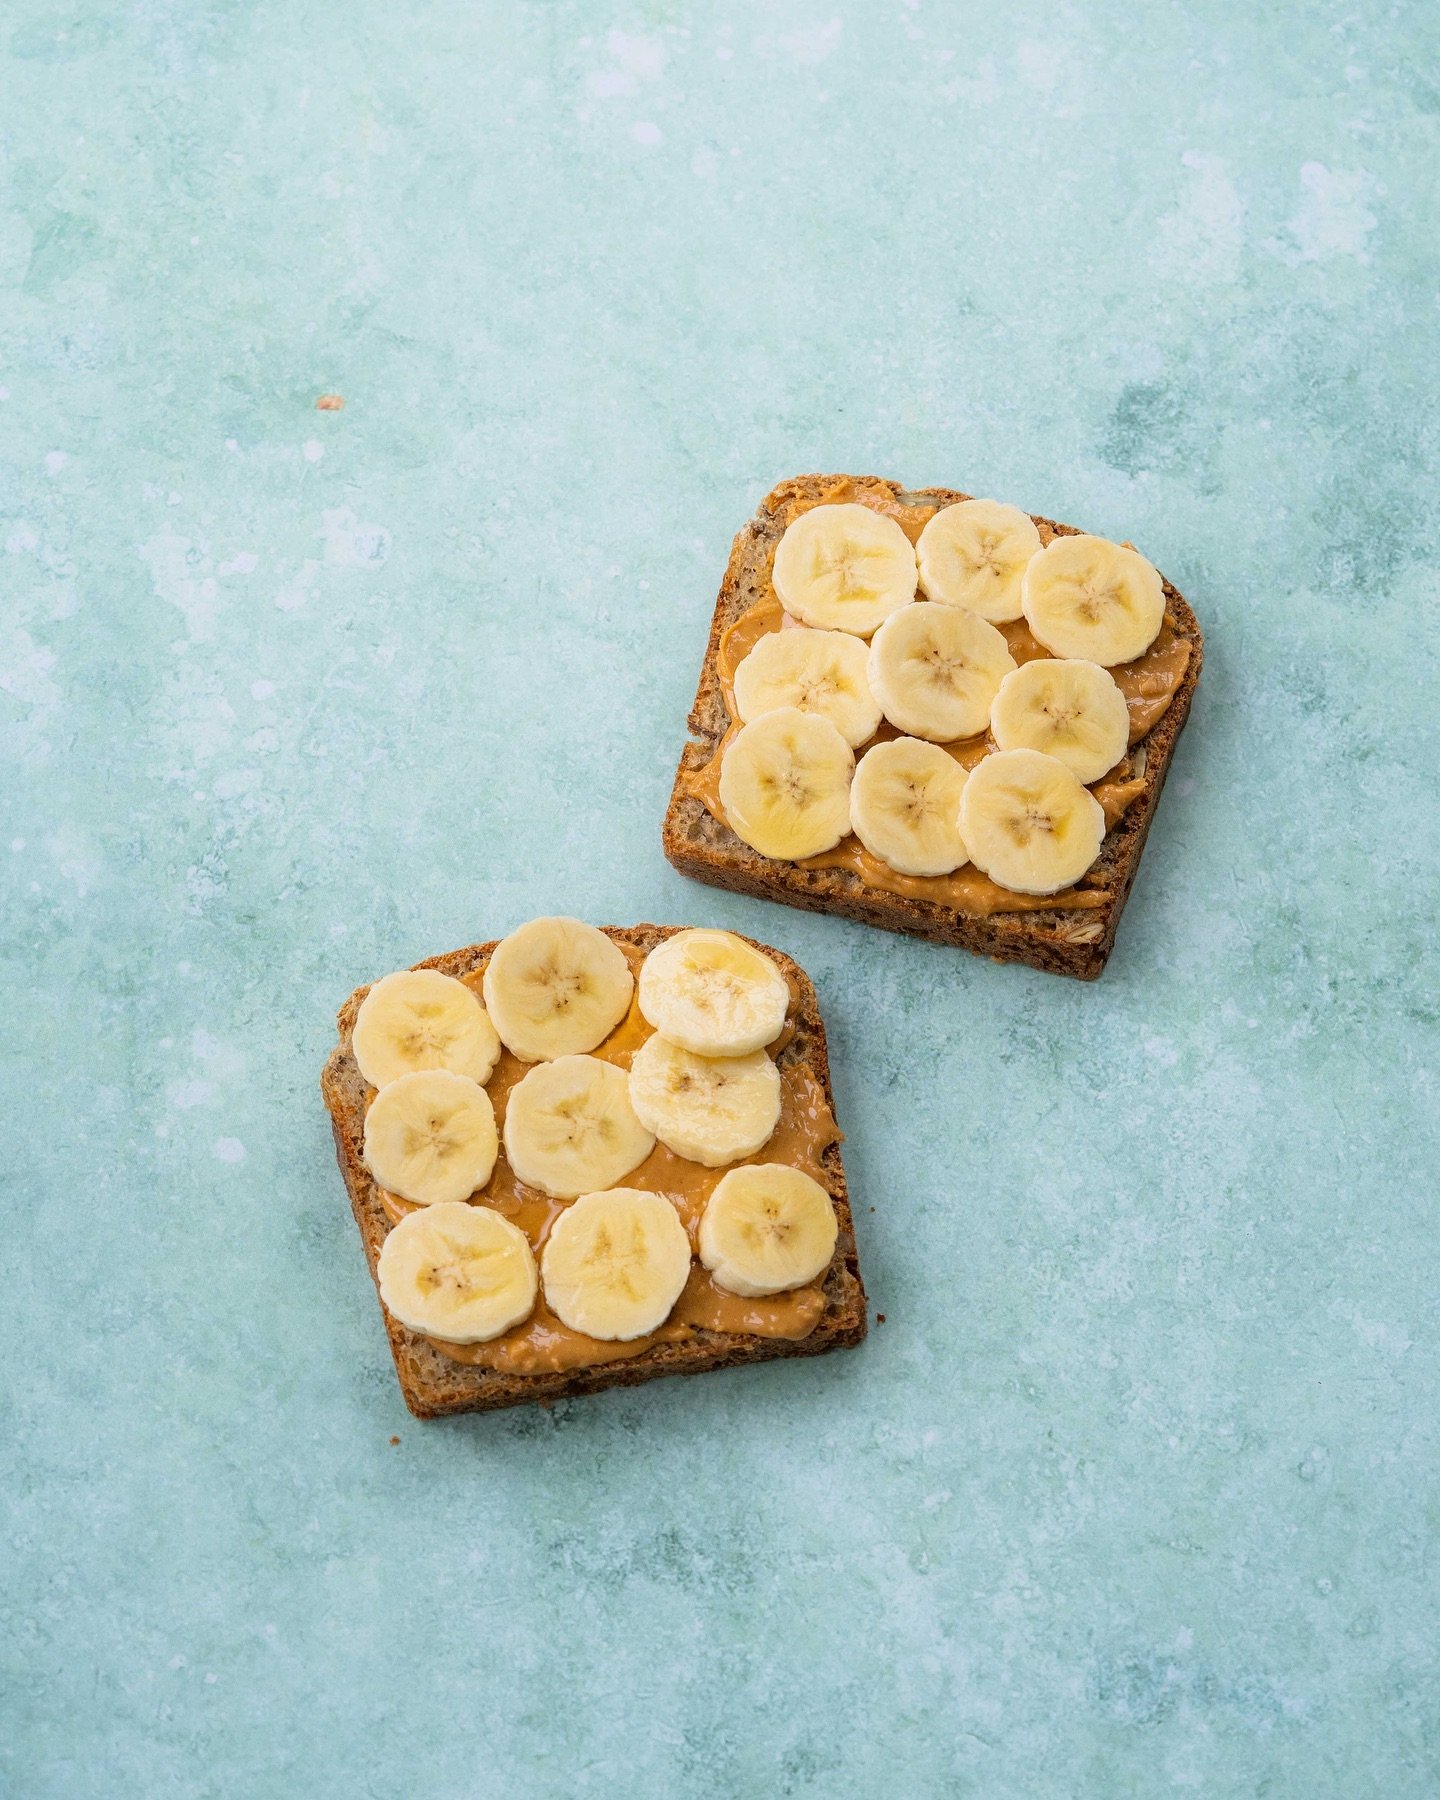 Keep it simple 🙃
Favorite snack: homemade bread + peanut butter + banana ✨
.
#snack #easysnack #banana #peanutbutter #foodstagram